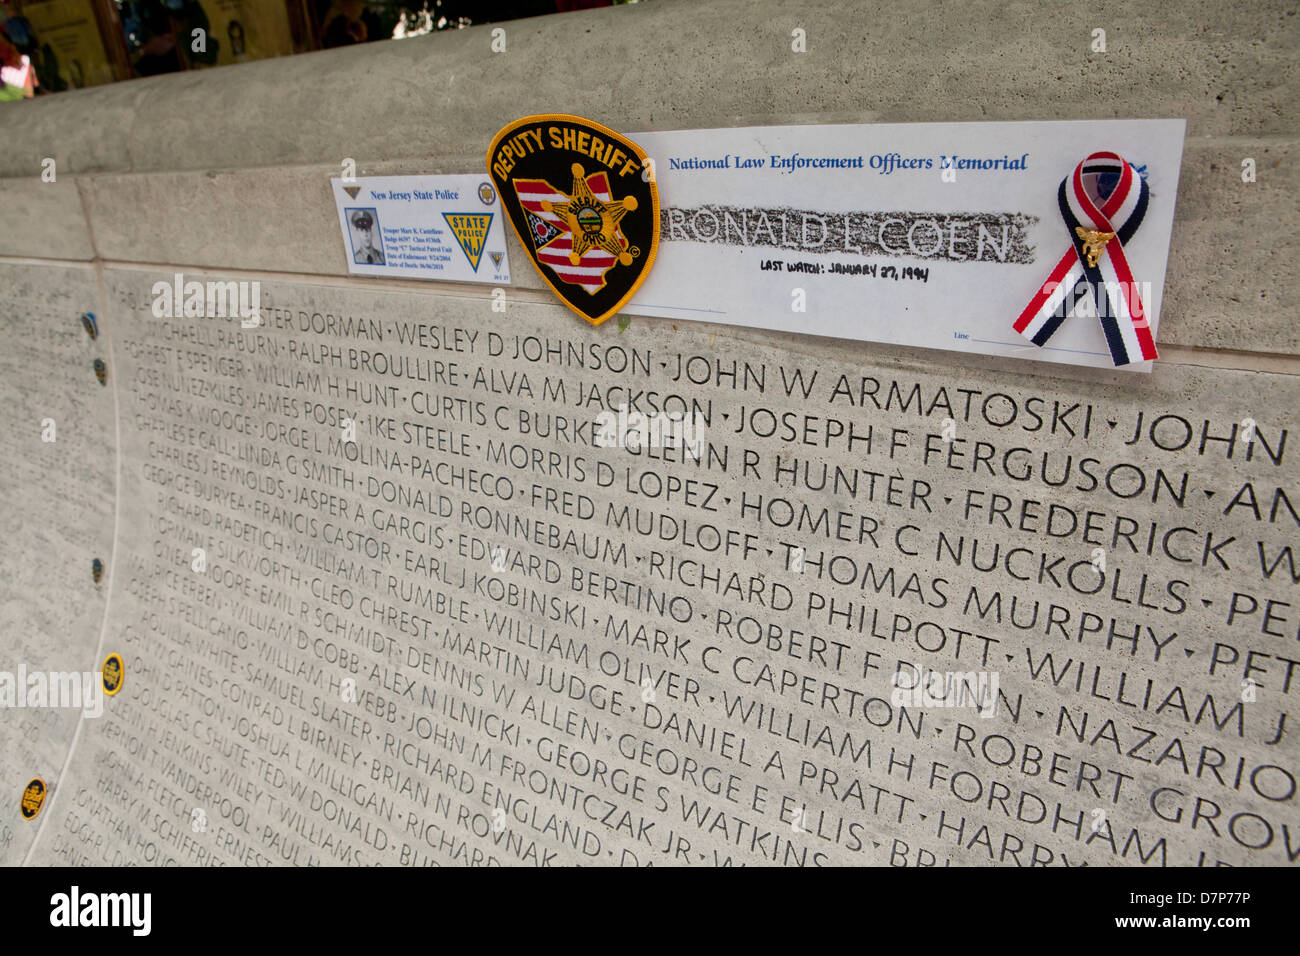 National Police Officers Memorial Wall - Washington, DC USA Stockfoto